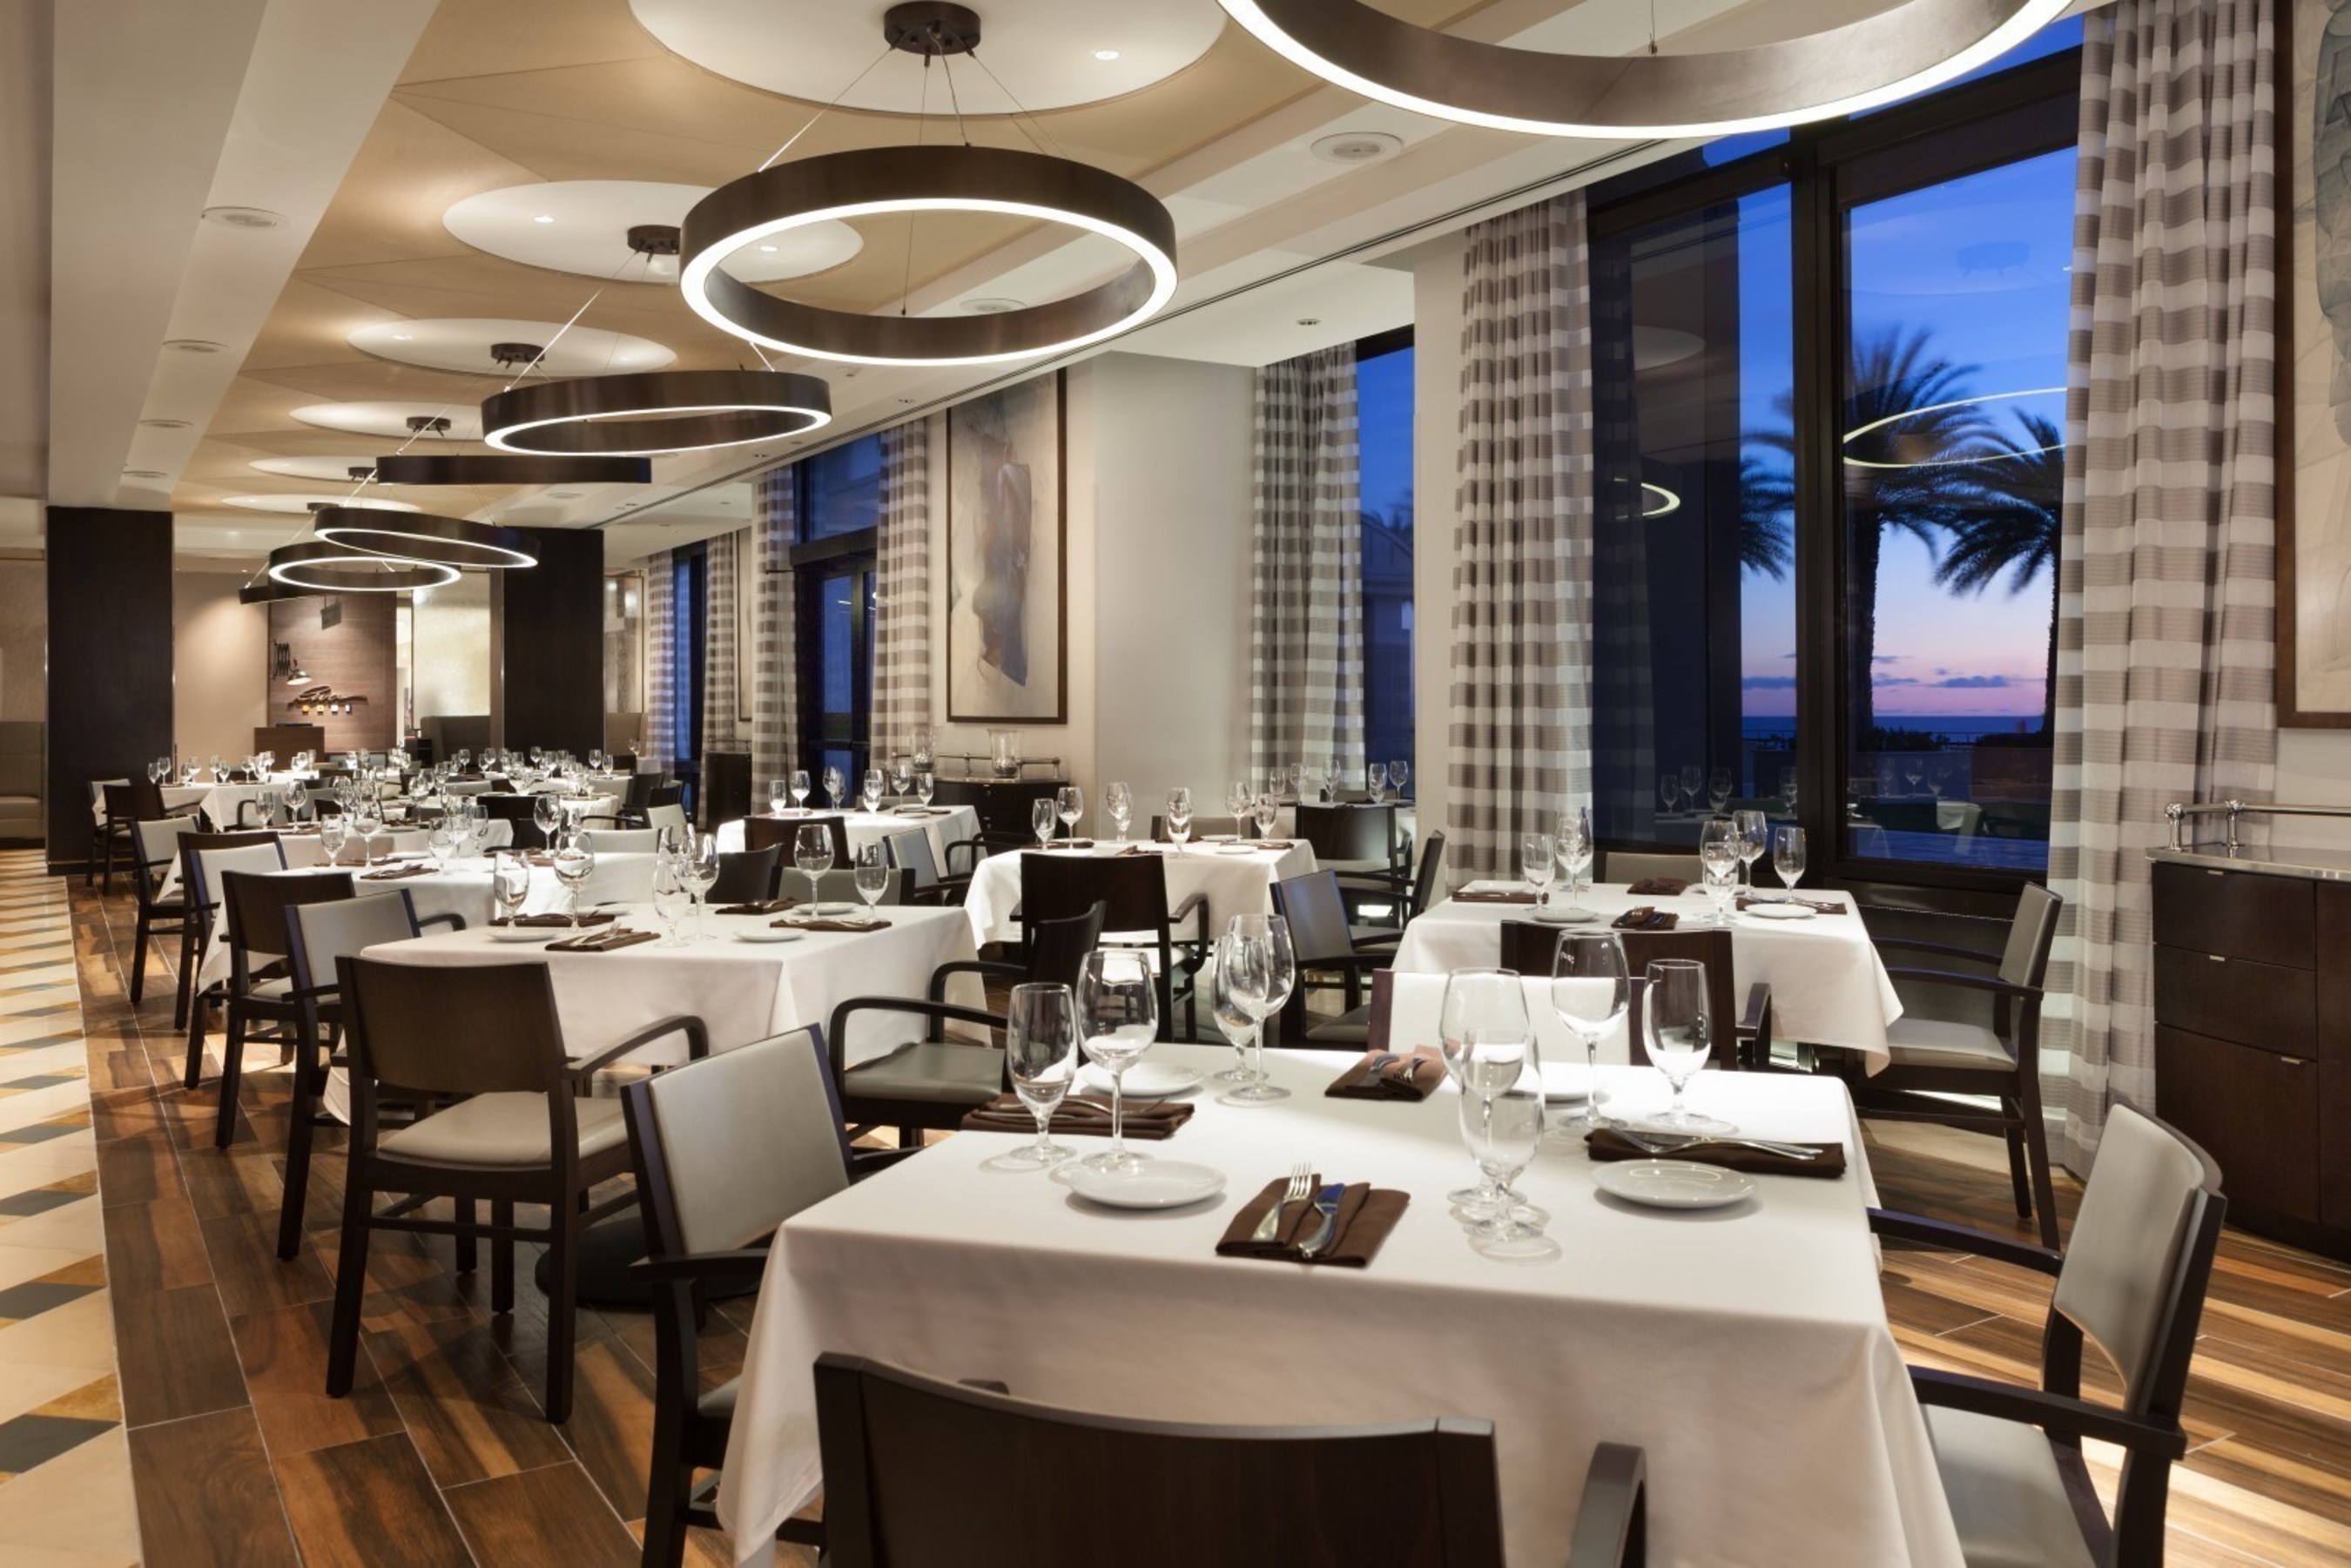 Renovation At 3030 Ocean Enhances Dining Experience At Fort Lauderdale Marriott Harbor Beach